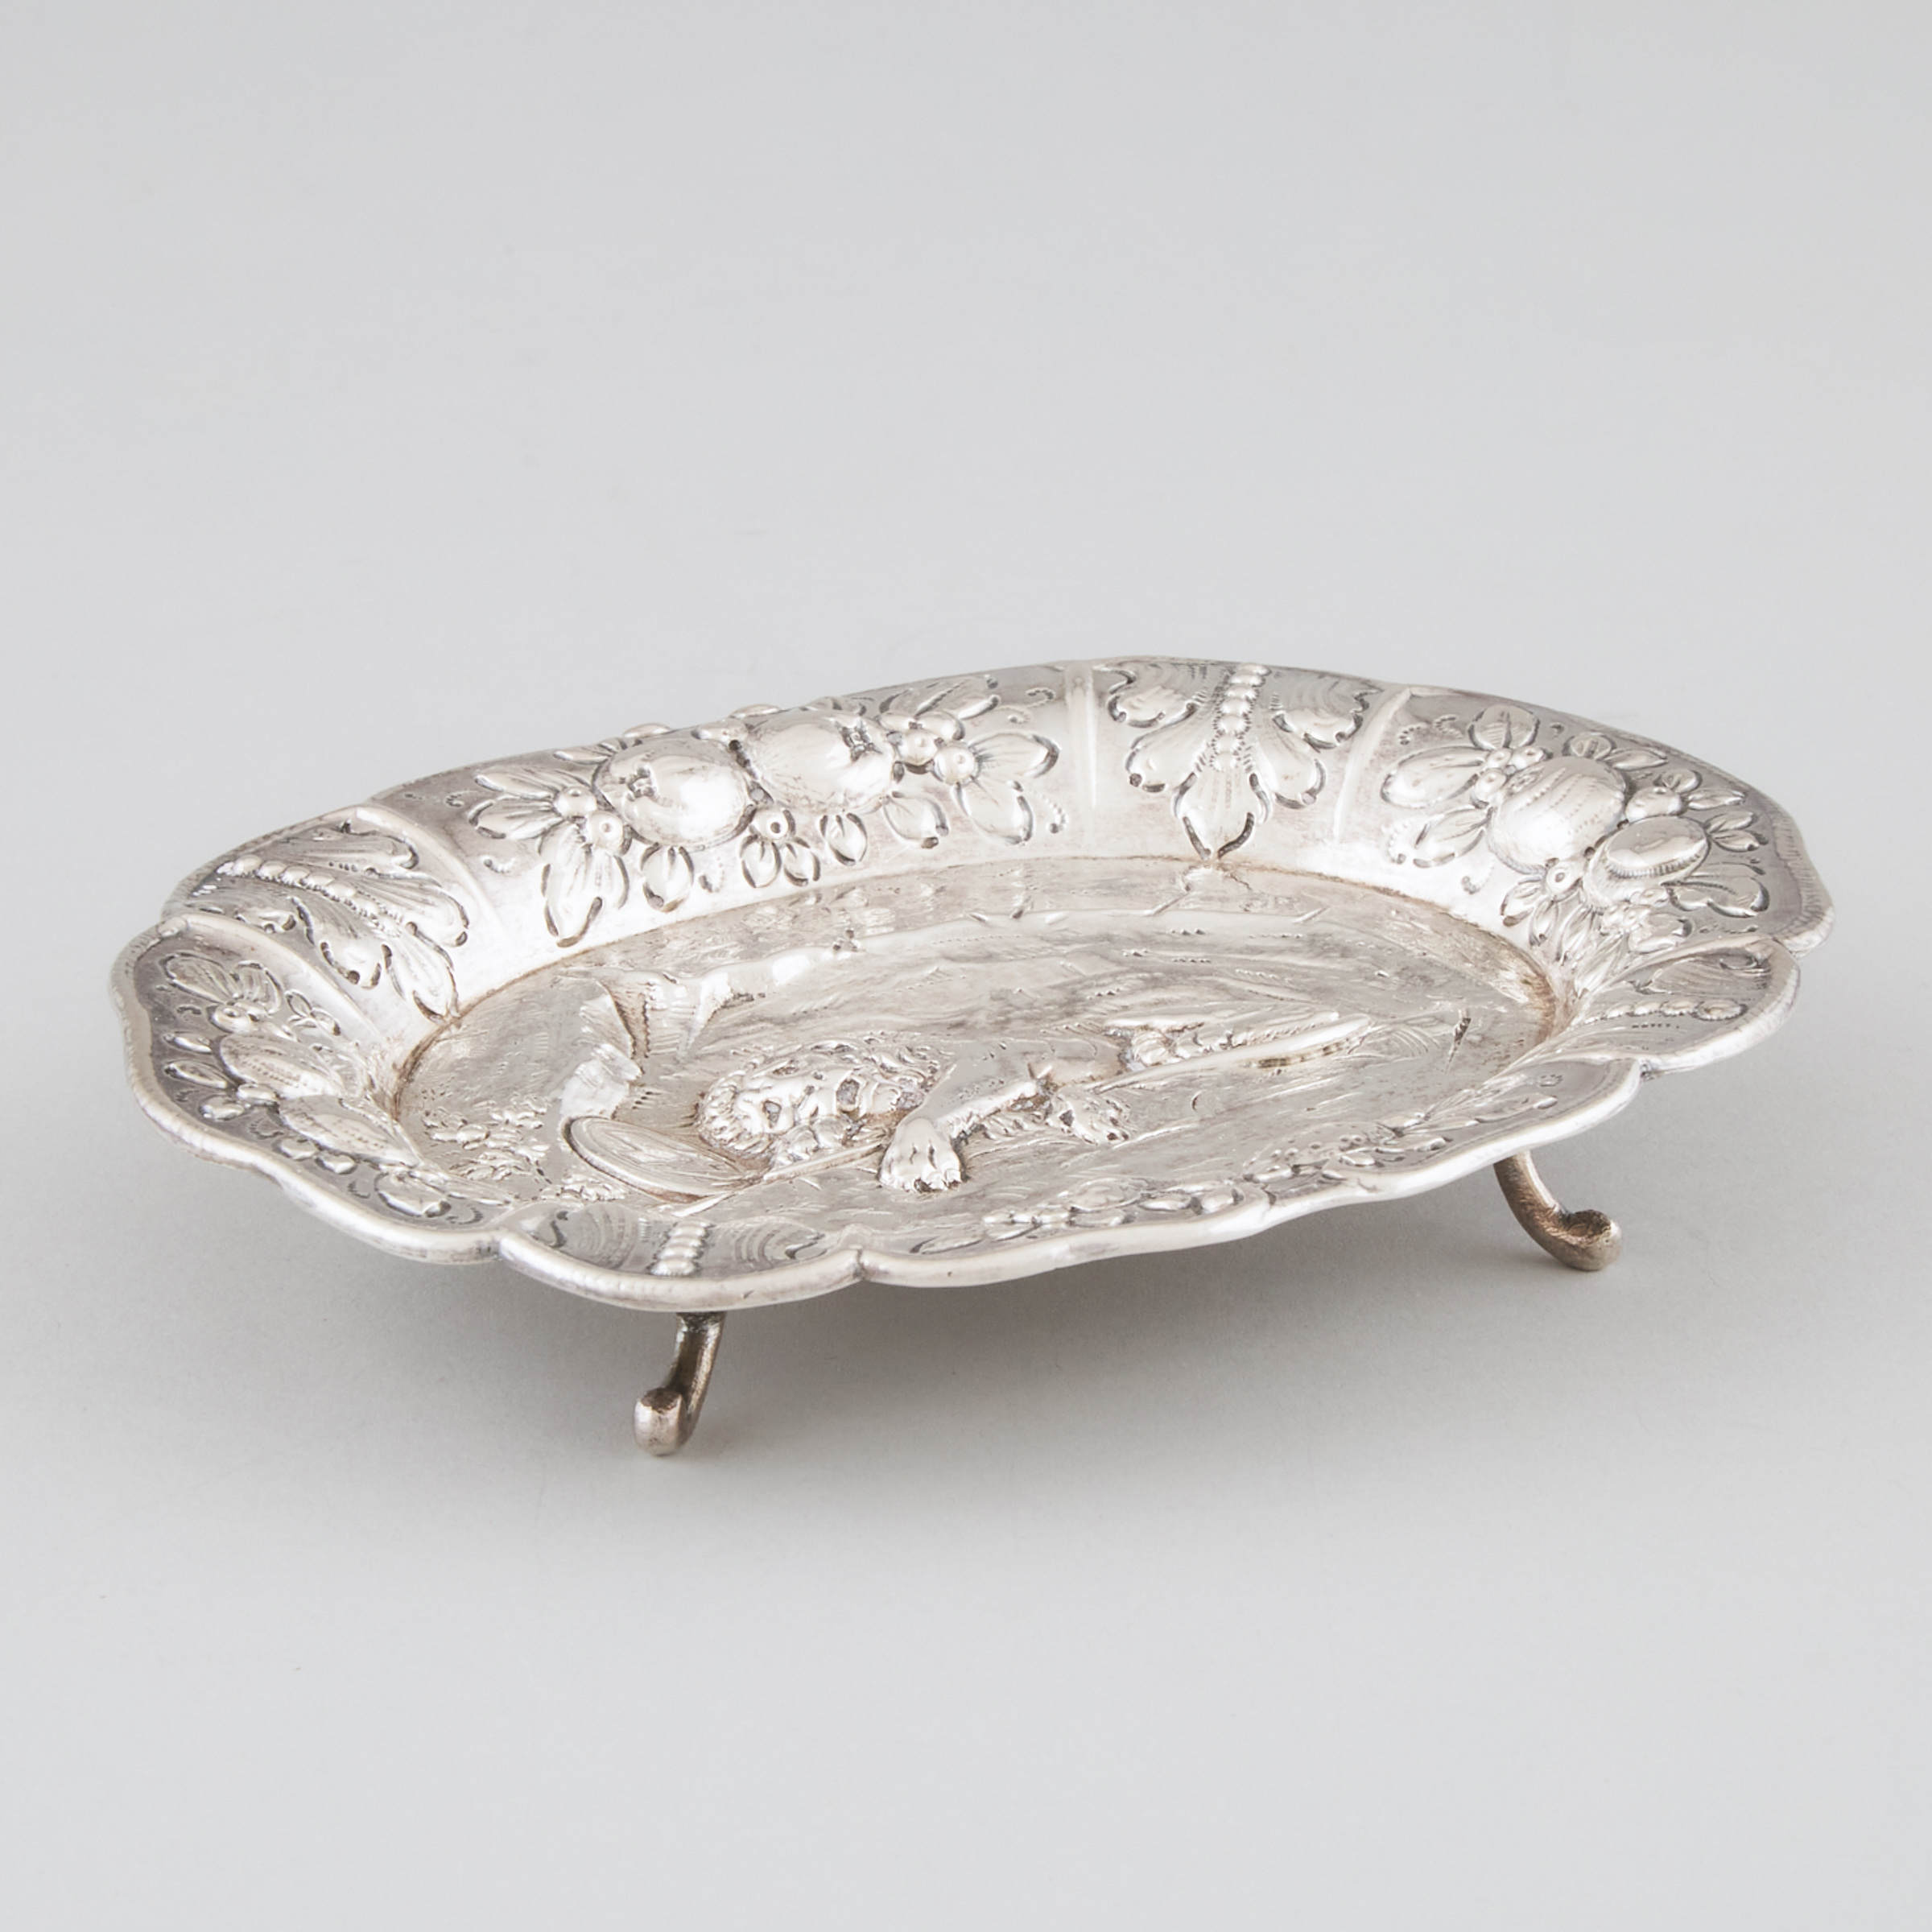 German Silver Lion of Lucerne Repoussé Small Oval Dish, J.D. Schleissner & Söhne, Hanau, c.1900